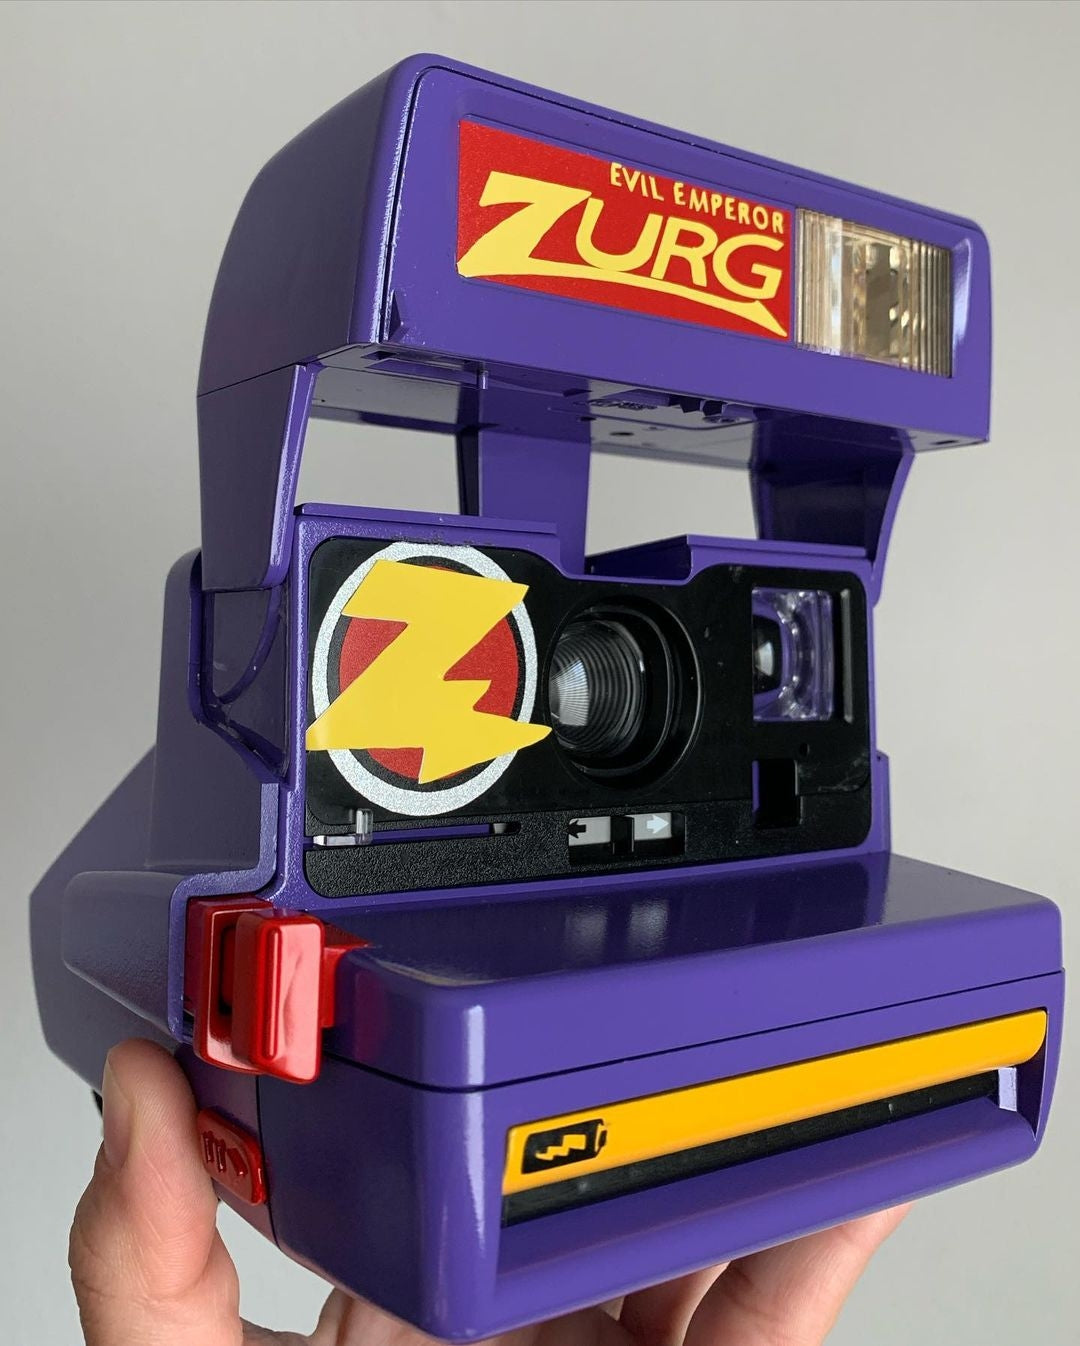 Zurg Toy Story Polaroid